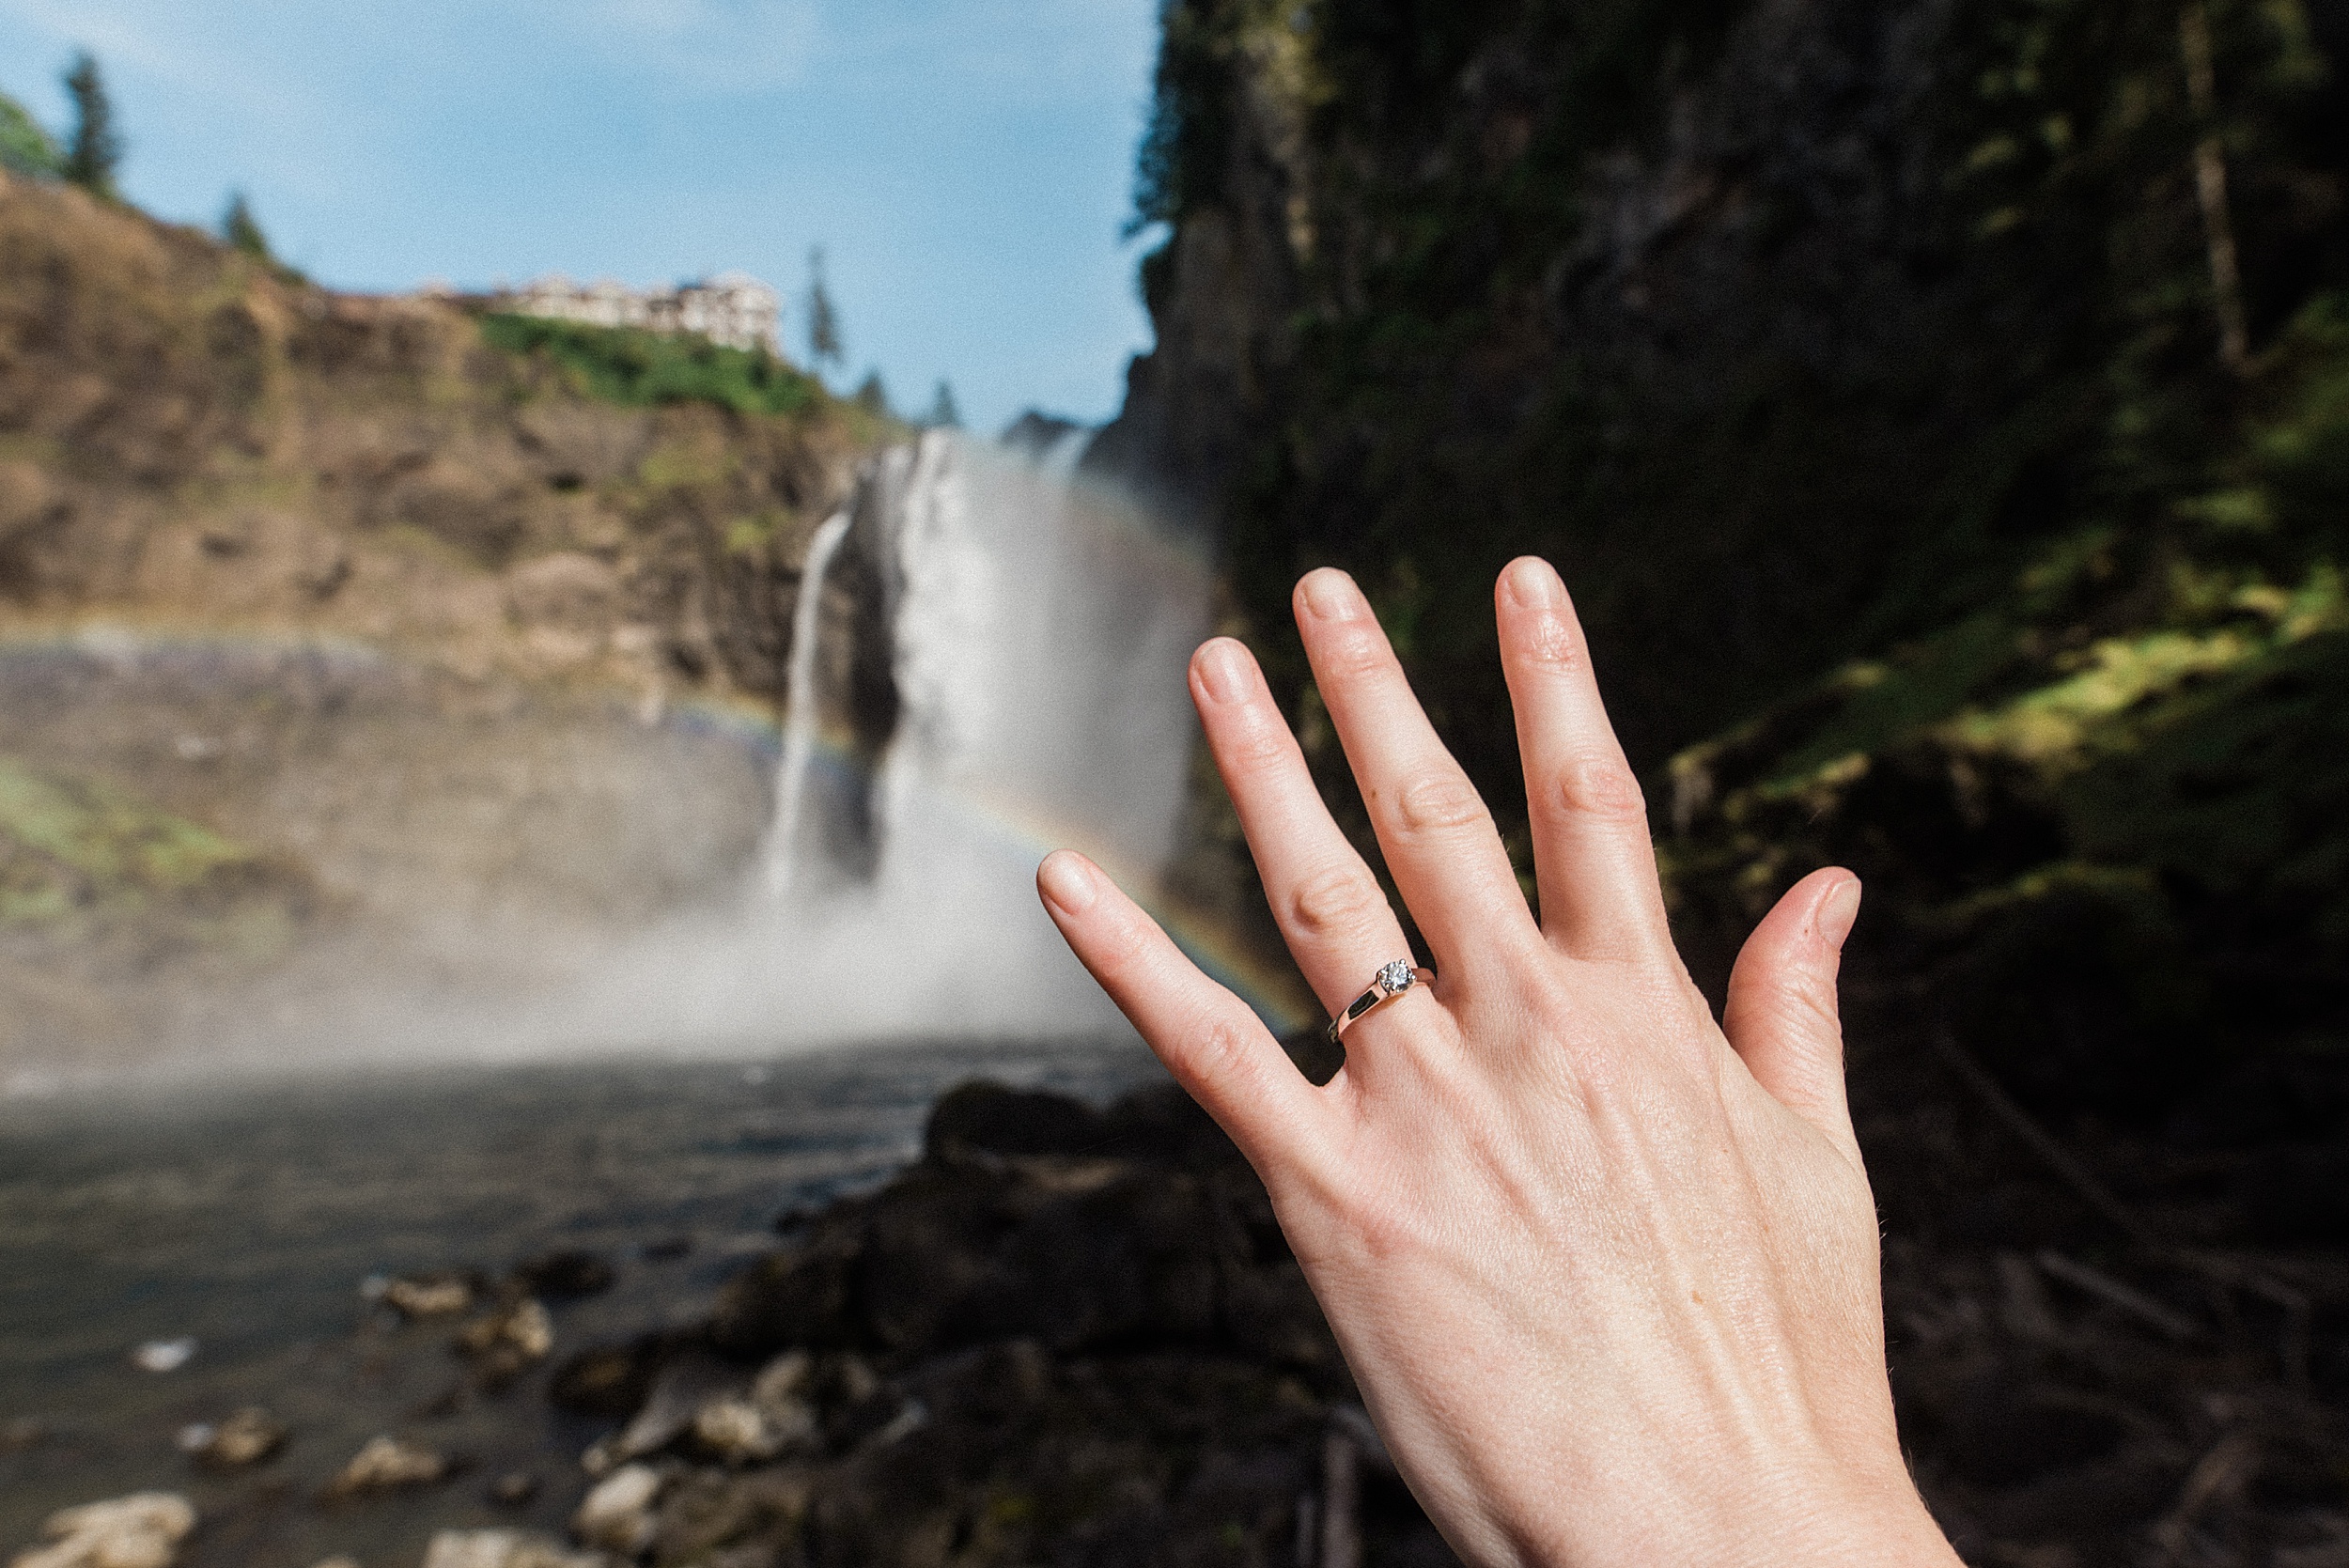 Snoqualmie Falls proposal engagement photos.